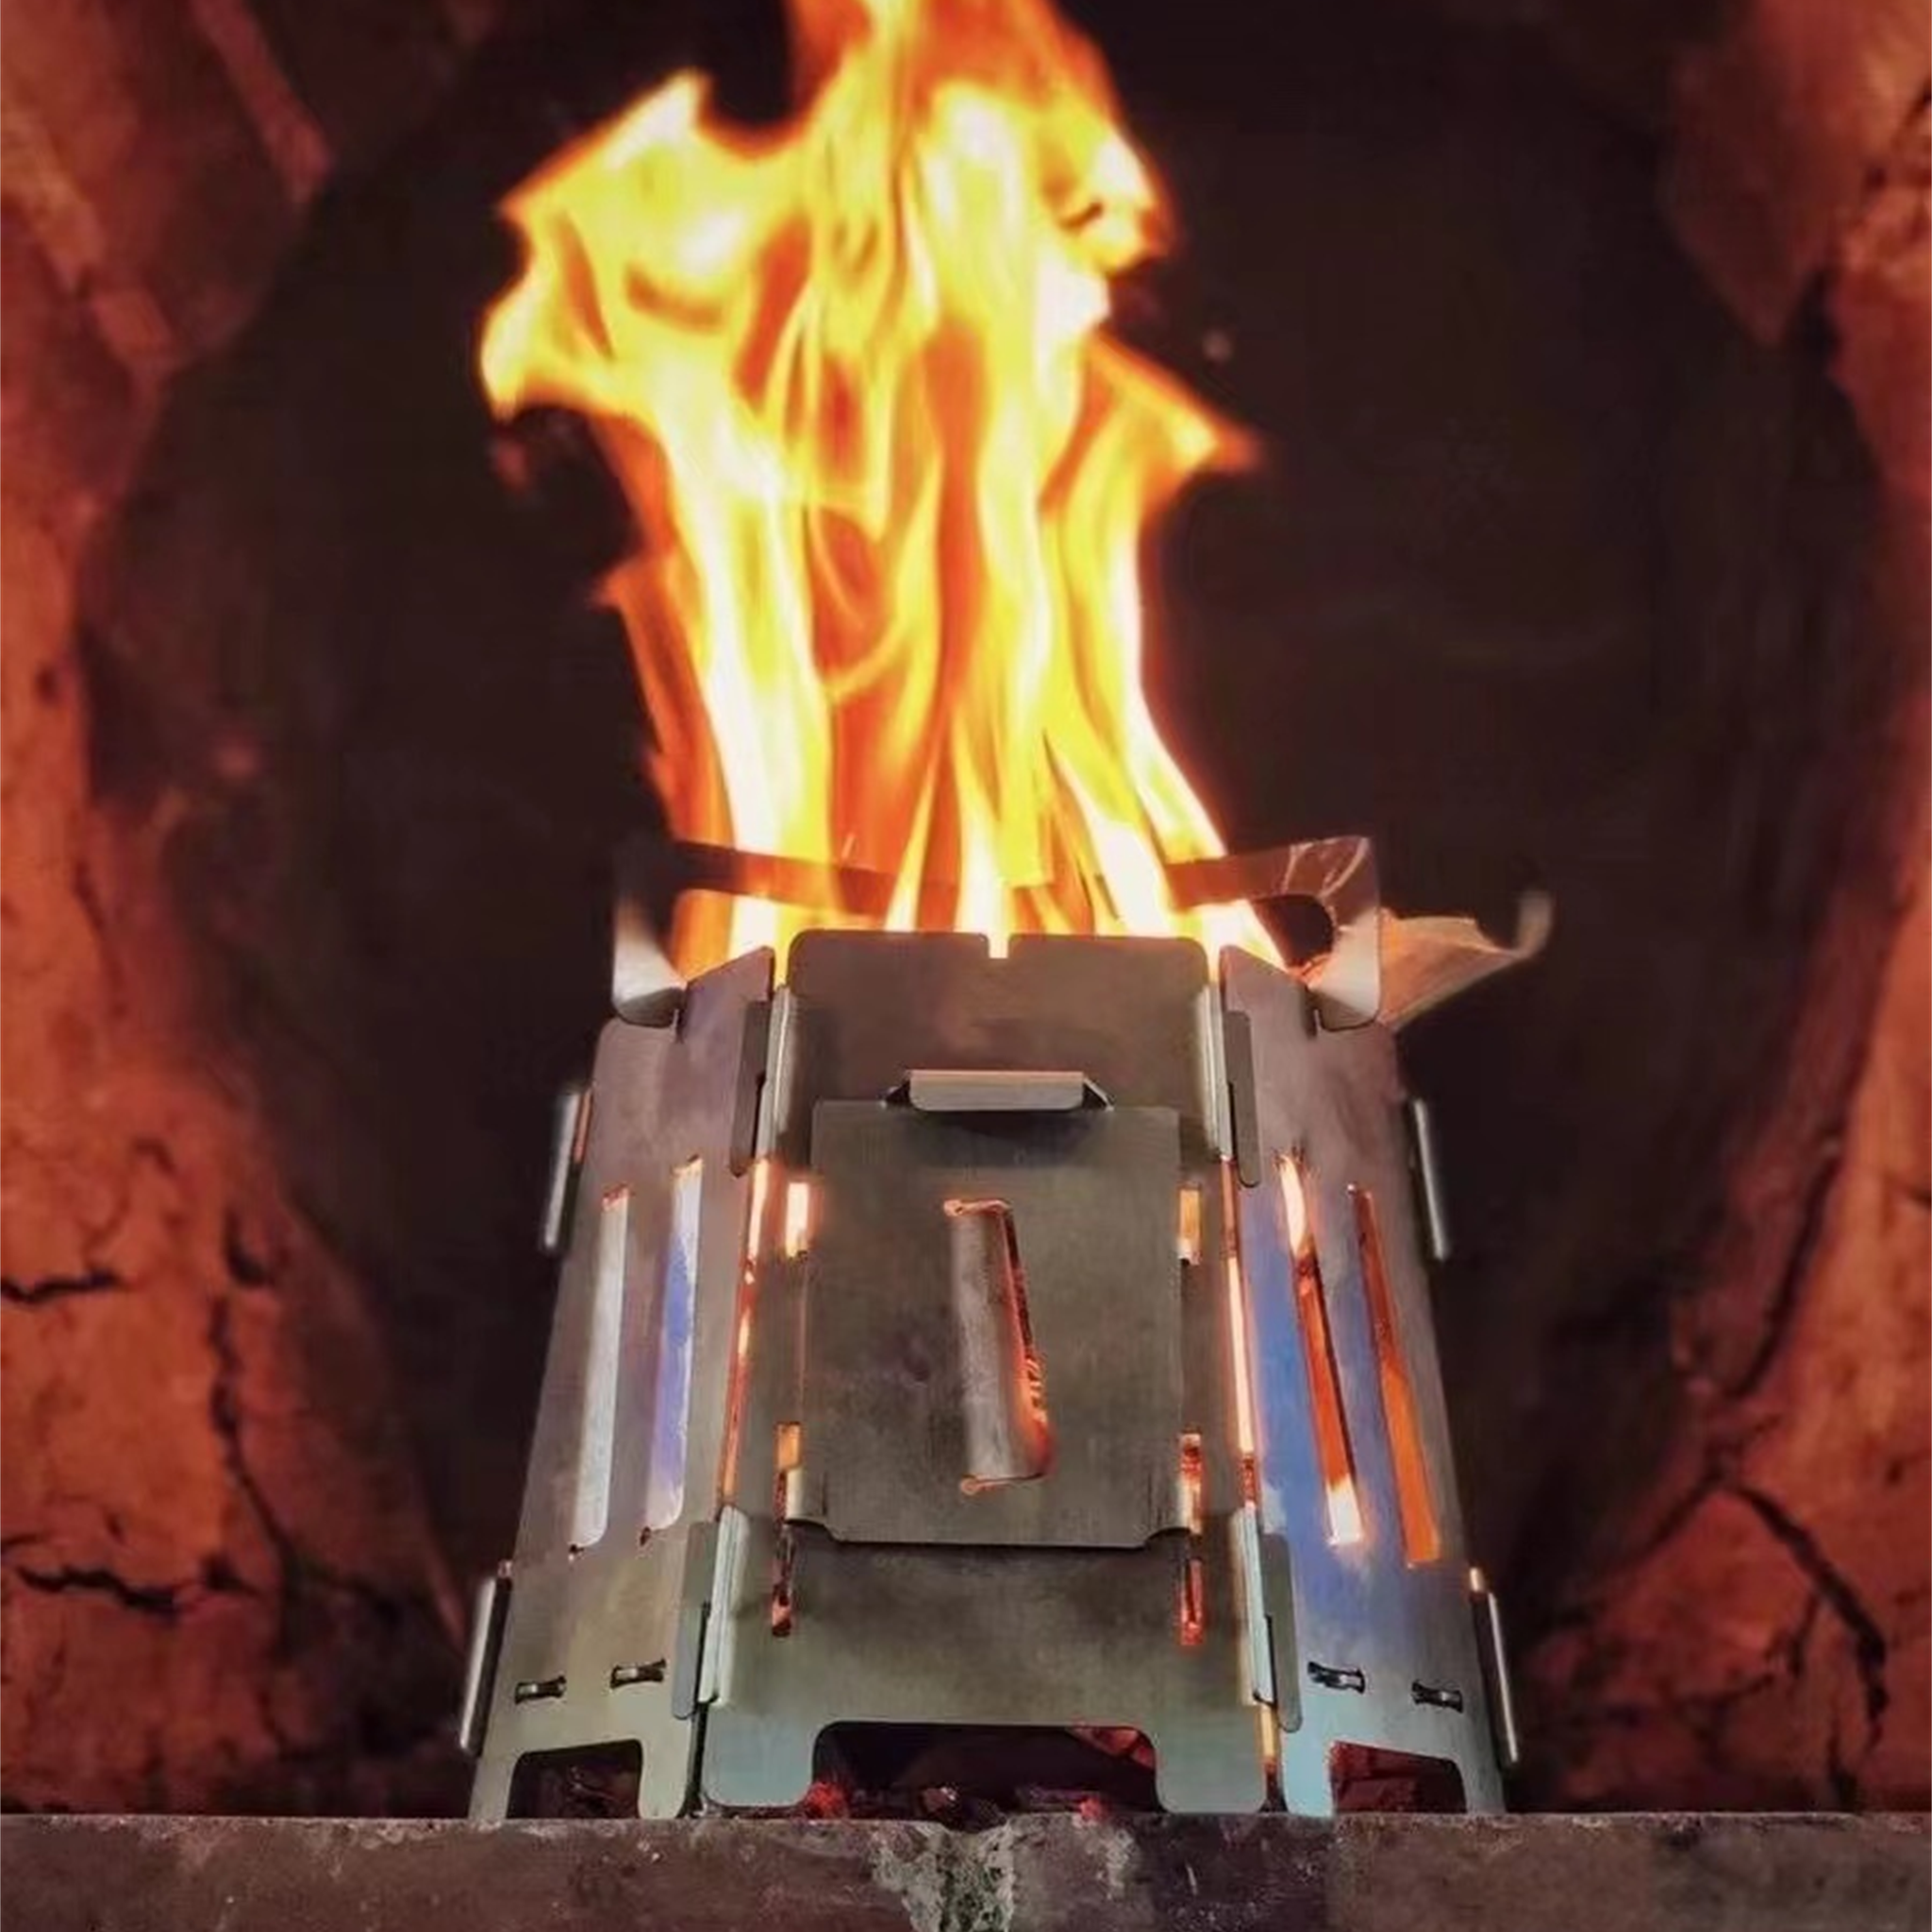 Tixsusステンレス製二次燃焼式焚き火台「火宴」 - 3